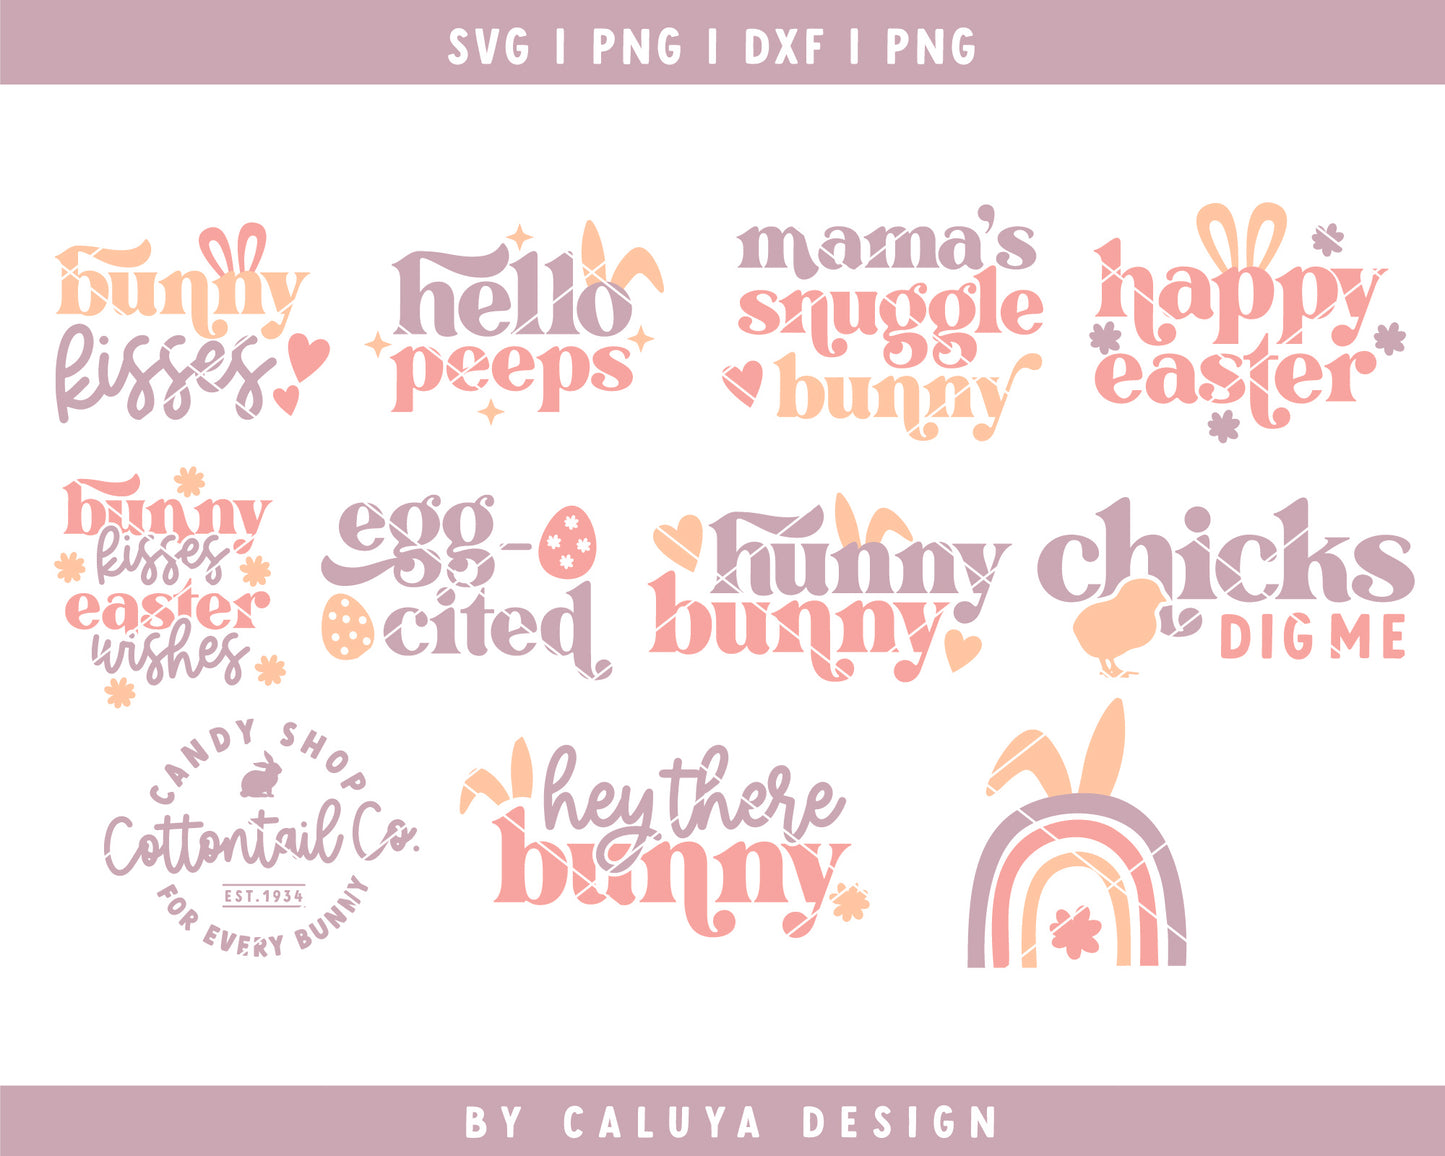 Hoppy Easter SVG Bundle, Cut File for Cricut, Cameo Silhouette | Easter SVG, Easter Bunny SVG